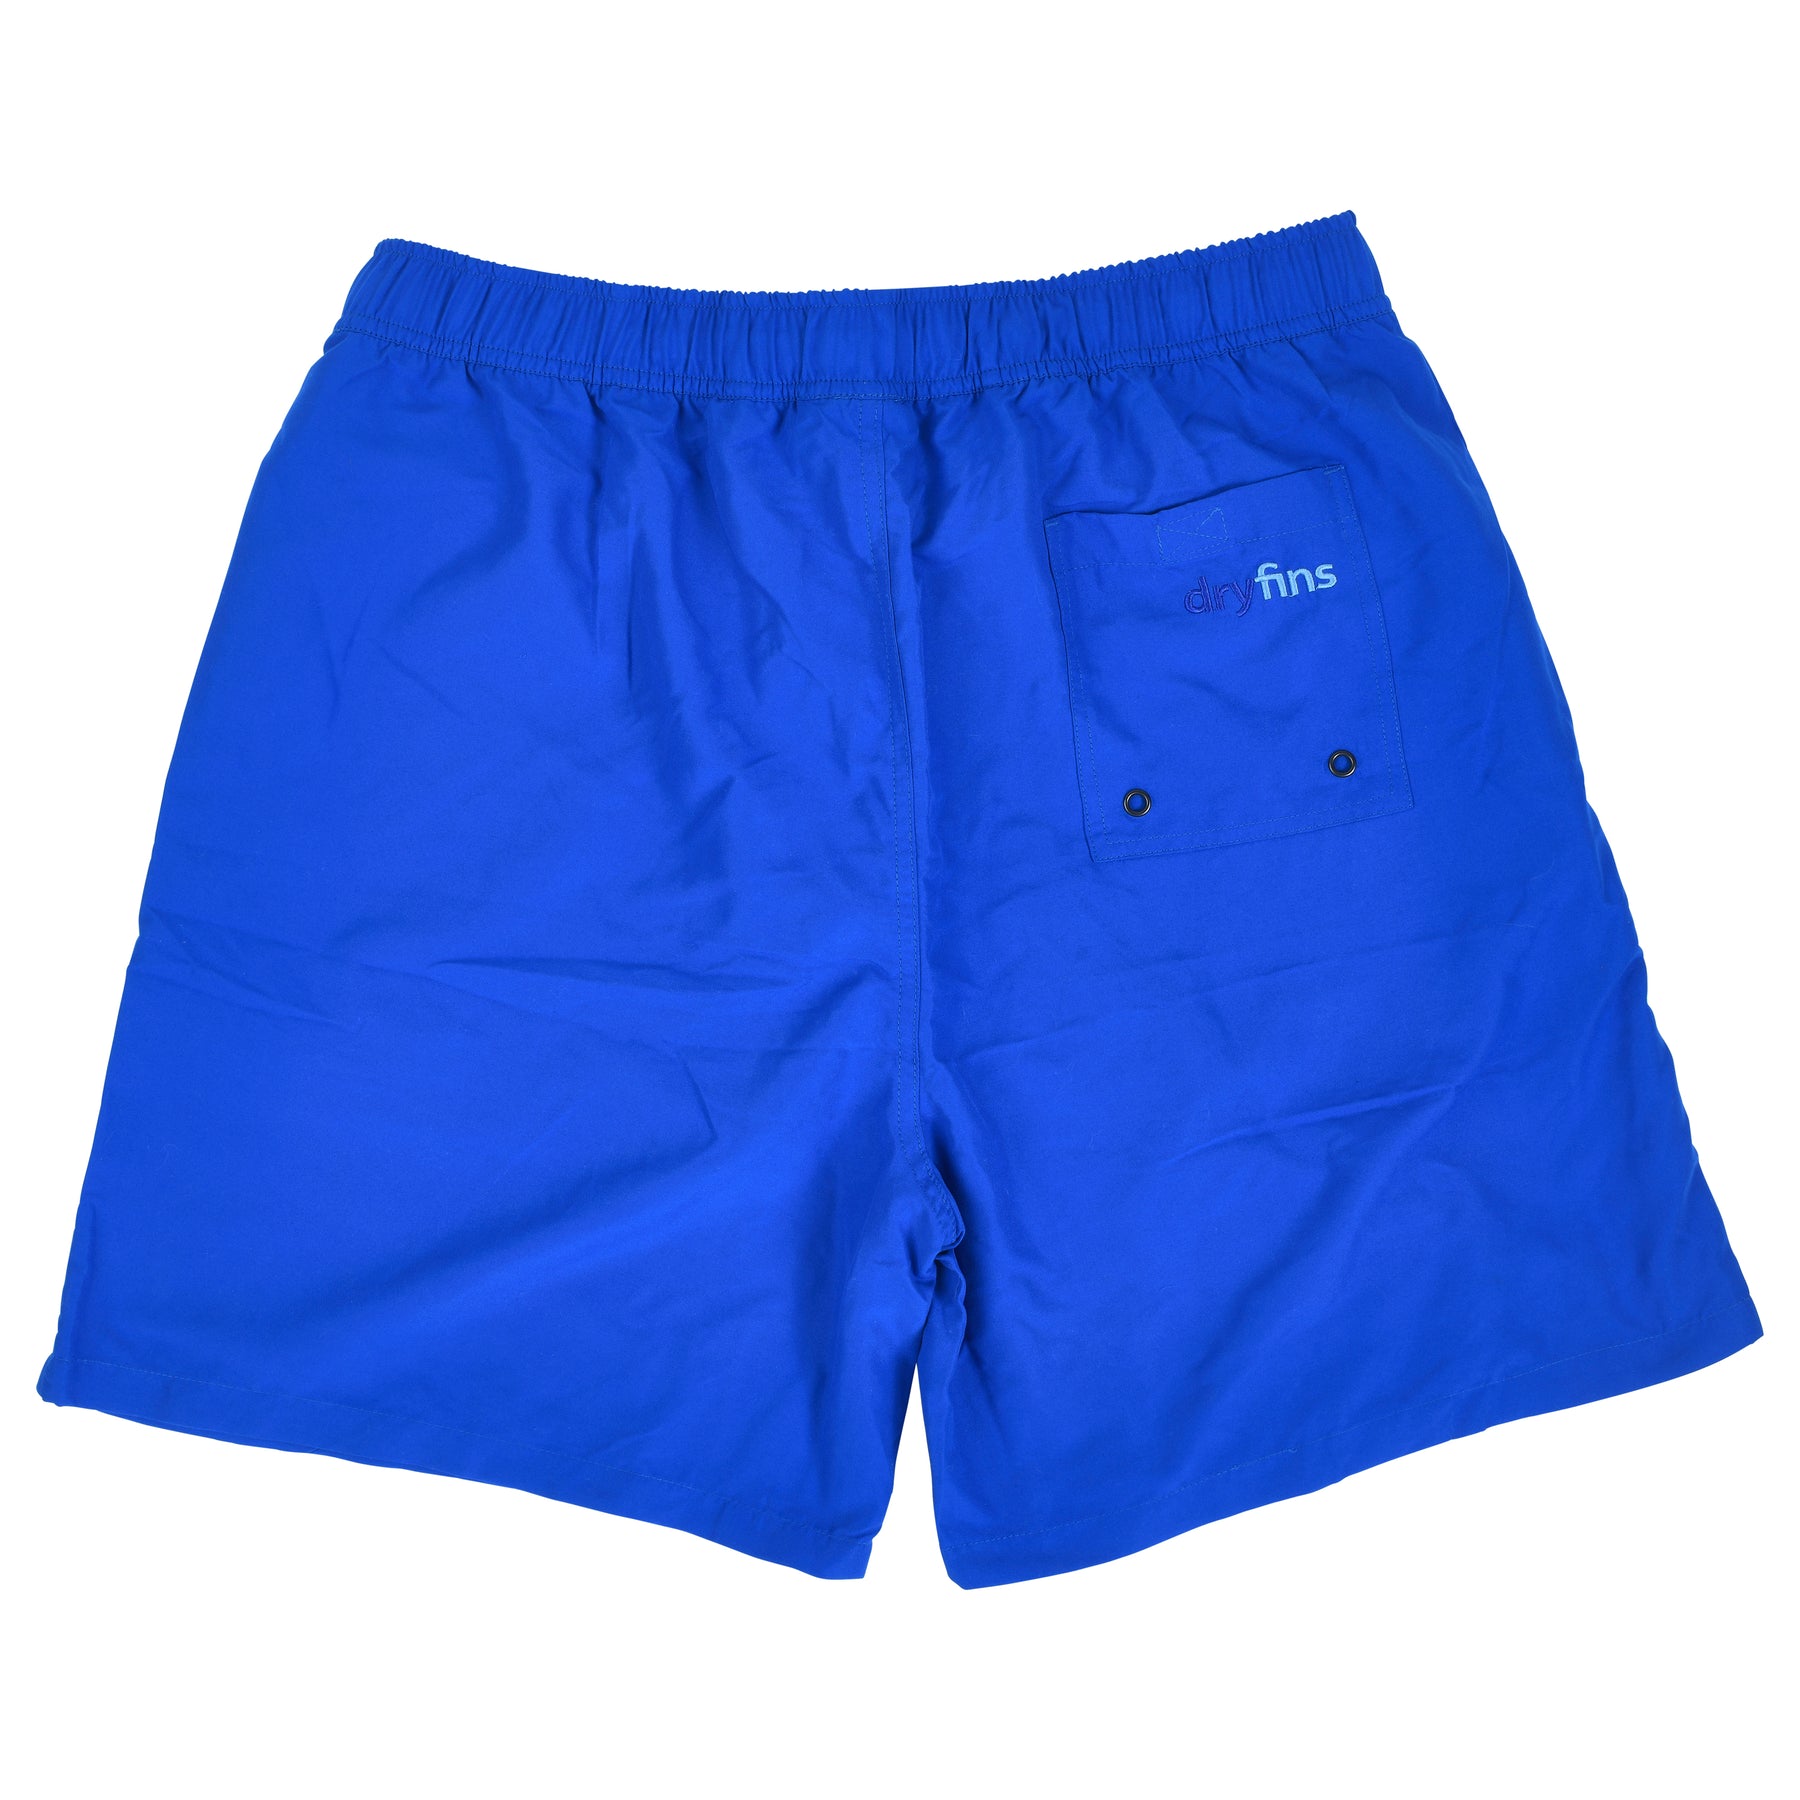 LRD Men's Swim Trunks with Compression Liner 7 inch Inseam Quick Dry Swim Shorts Sailfish/Blue - S, Gray